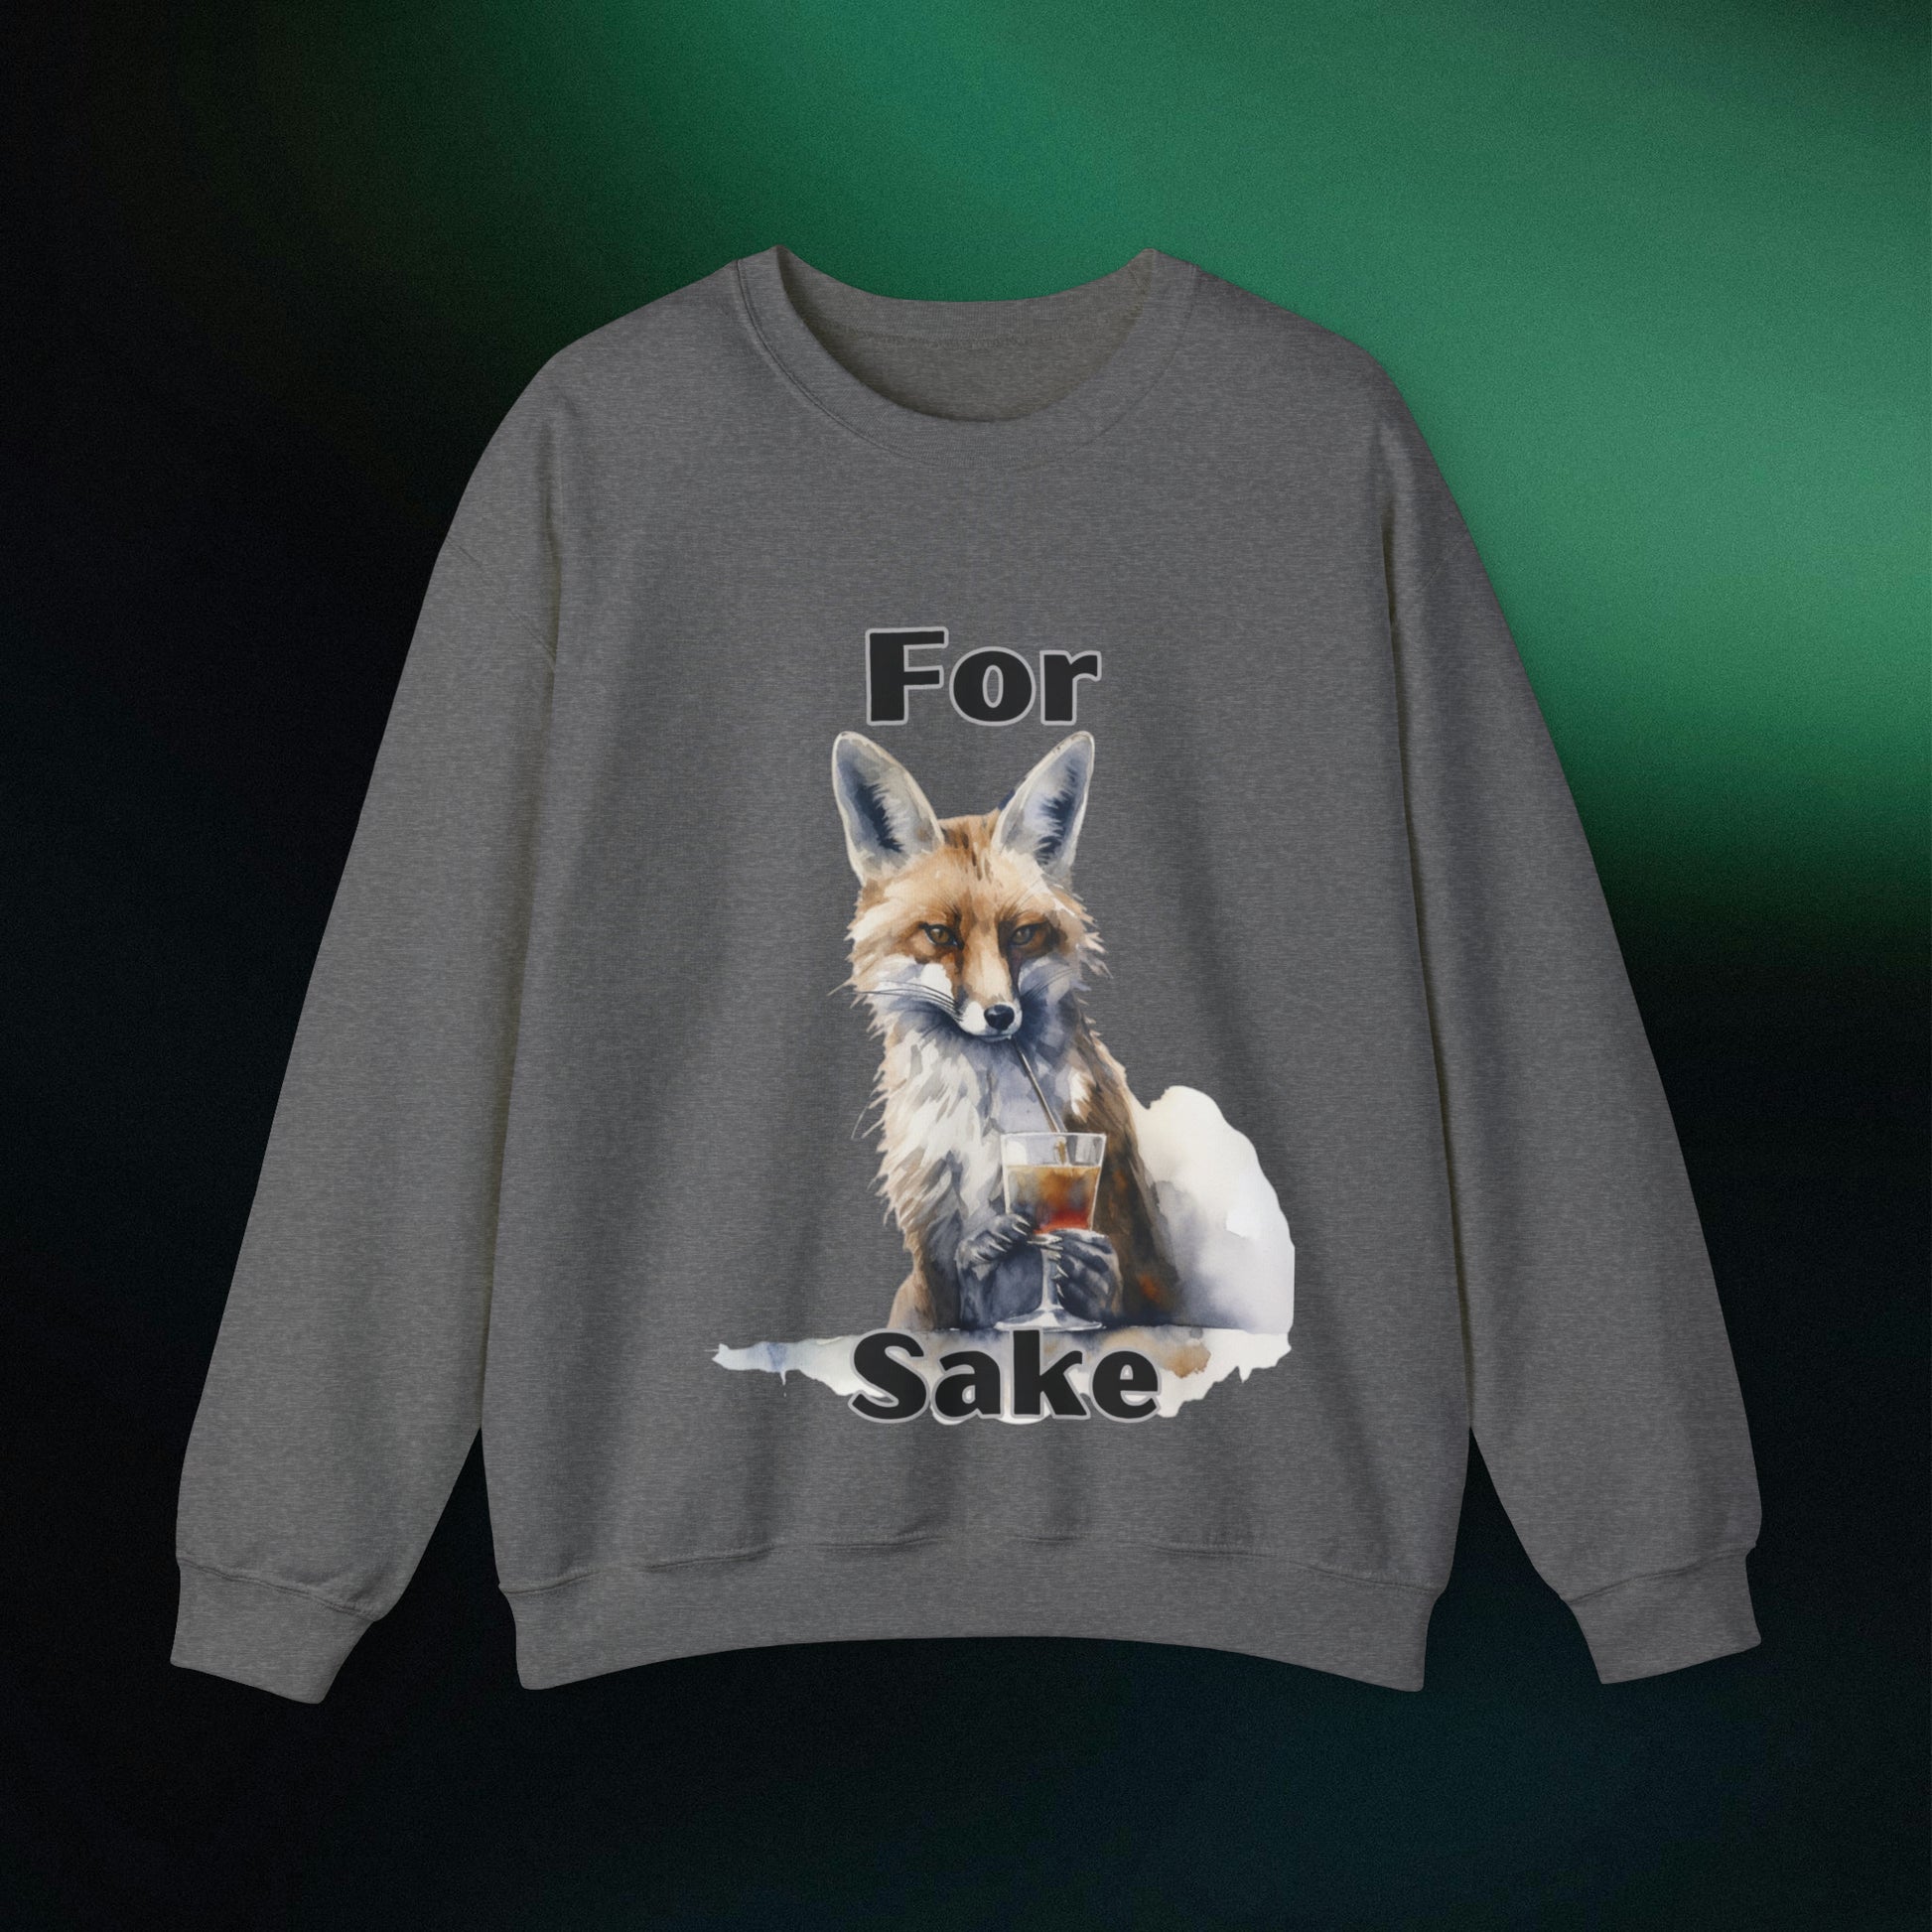 For Fox Sake: Funny Fox Sweatshirt | Gift for Fox Lover | Animal Lover Shirt - Cute Fox Gift for Nature Enthusiasts Sweatshirt S Graphite Heather 